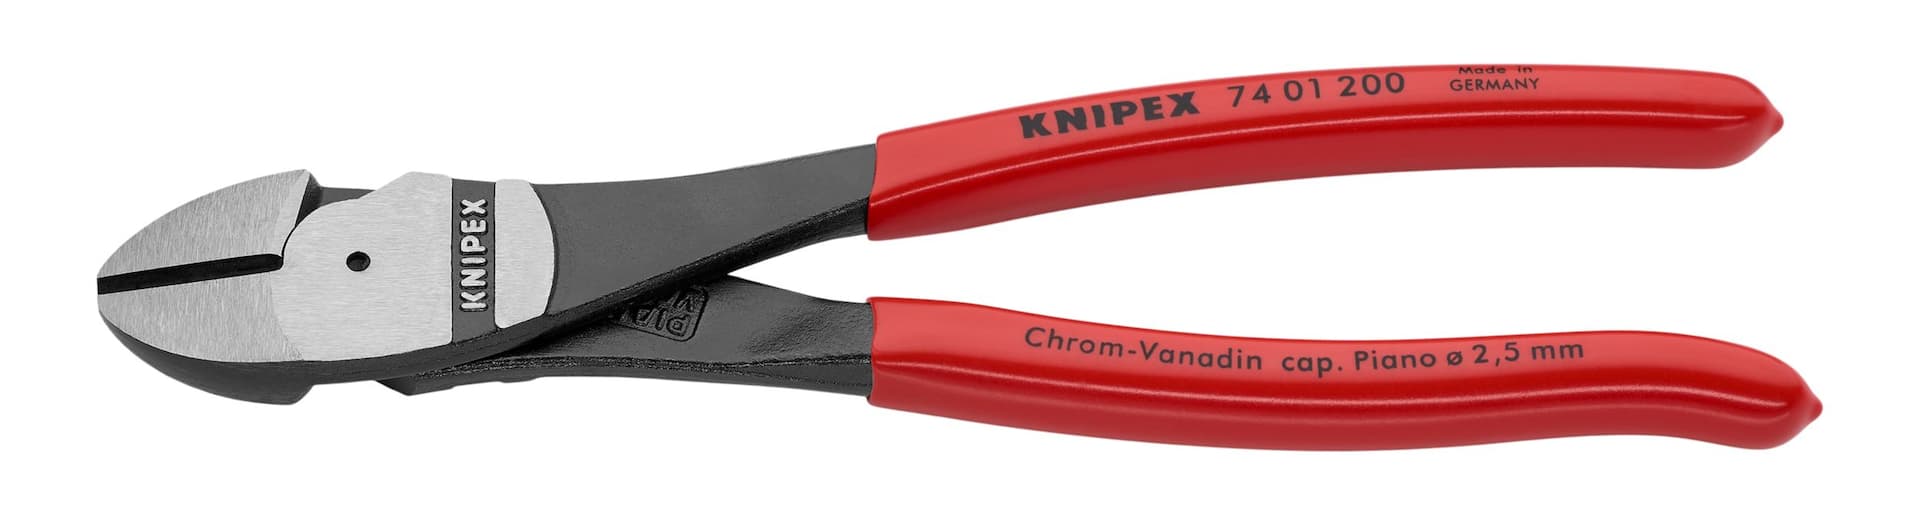 KNIPEX 74 01 200 SB High Leverage Diagonal Cutter, 8-in